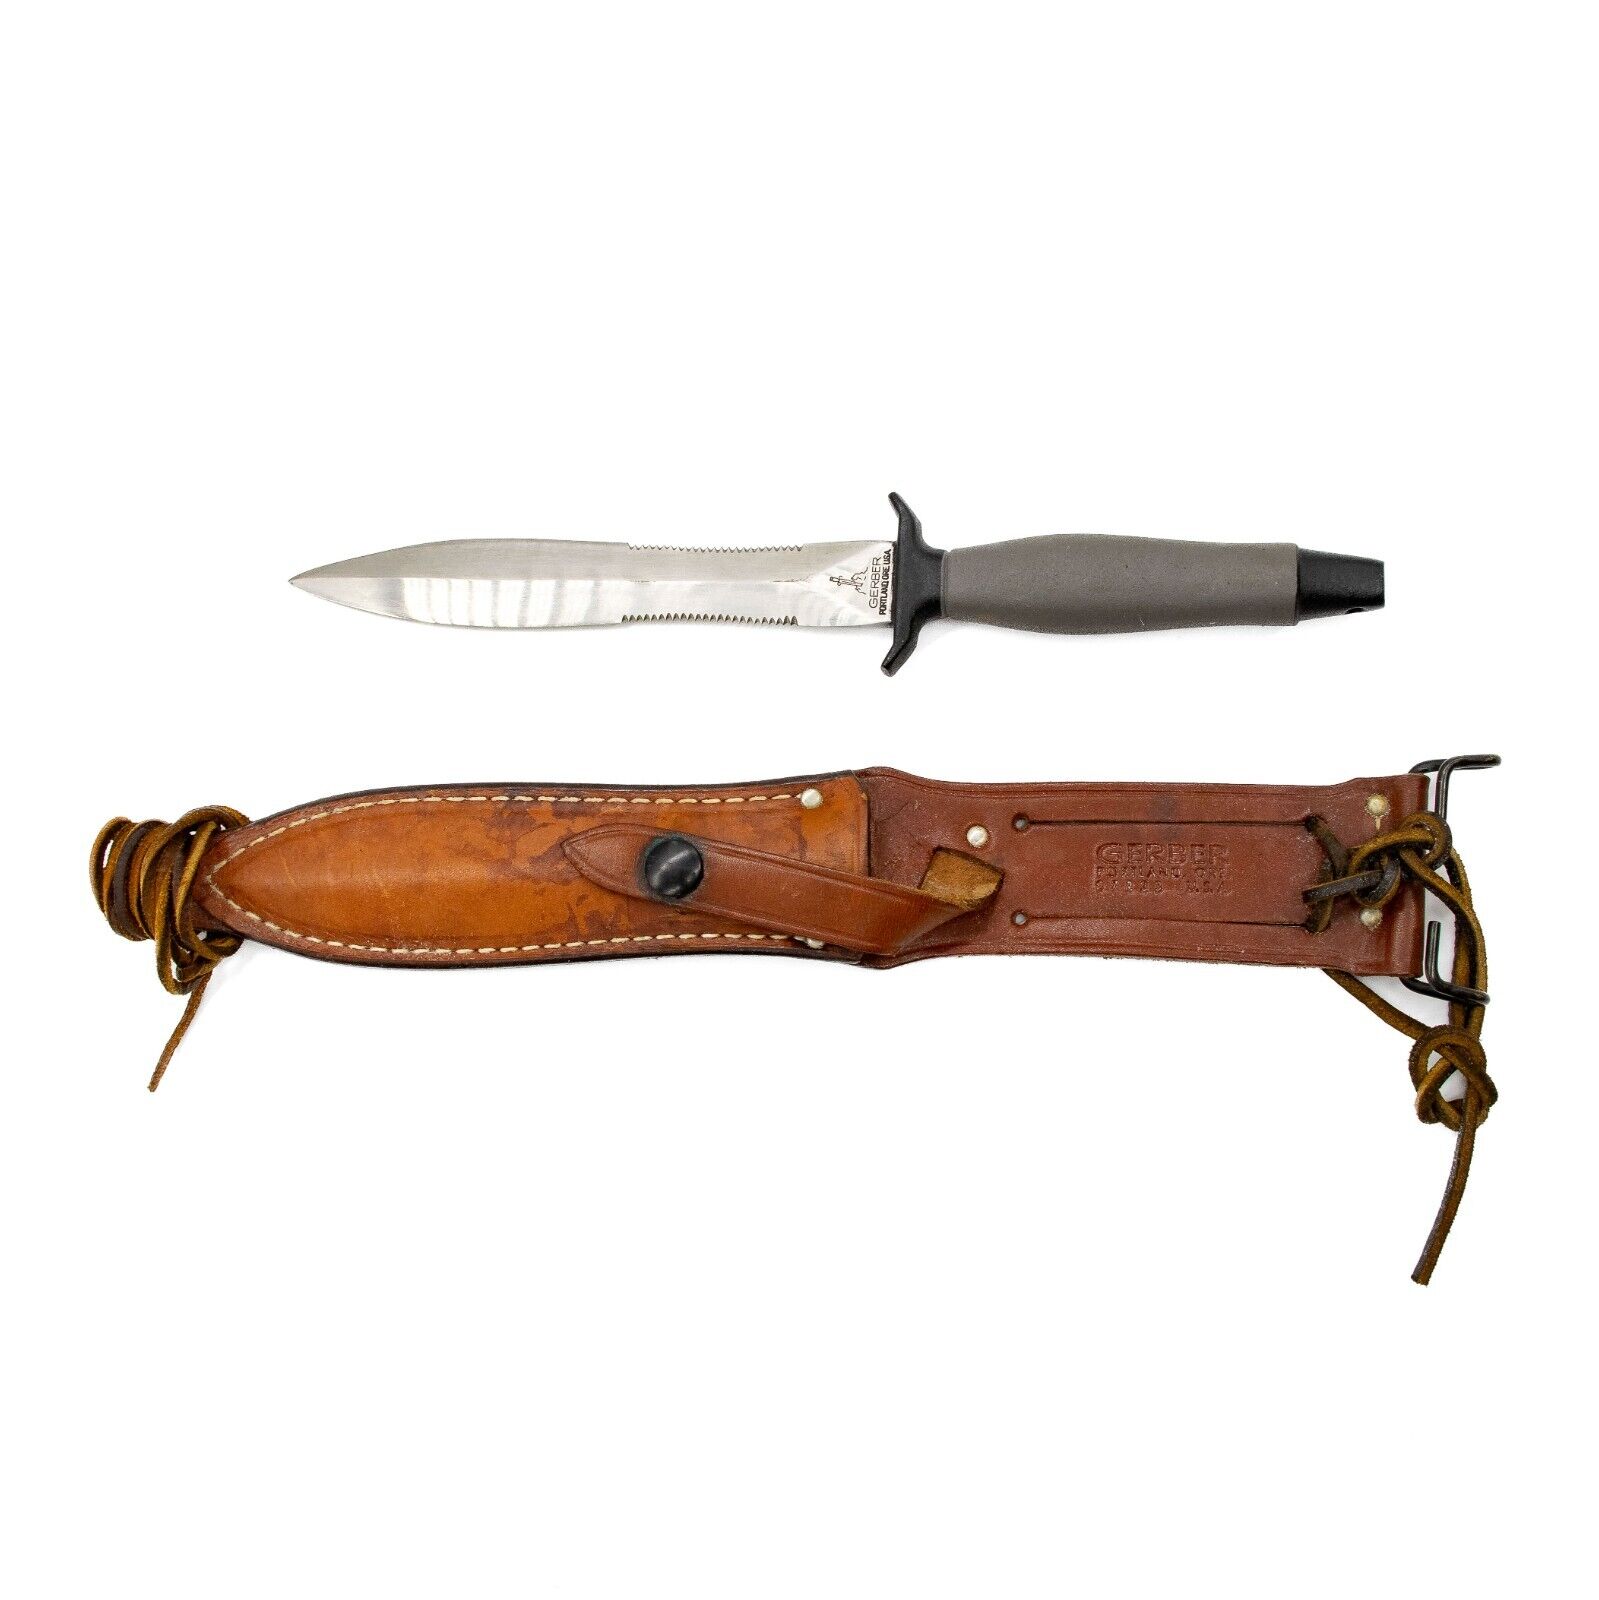 1975 Vietnam War era Mark II Survival Knife Gerber Fighting Knife Leather Sheath